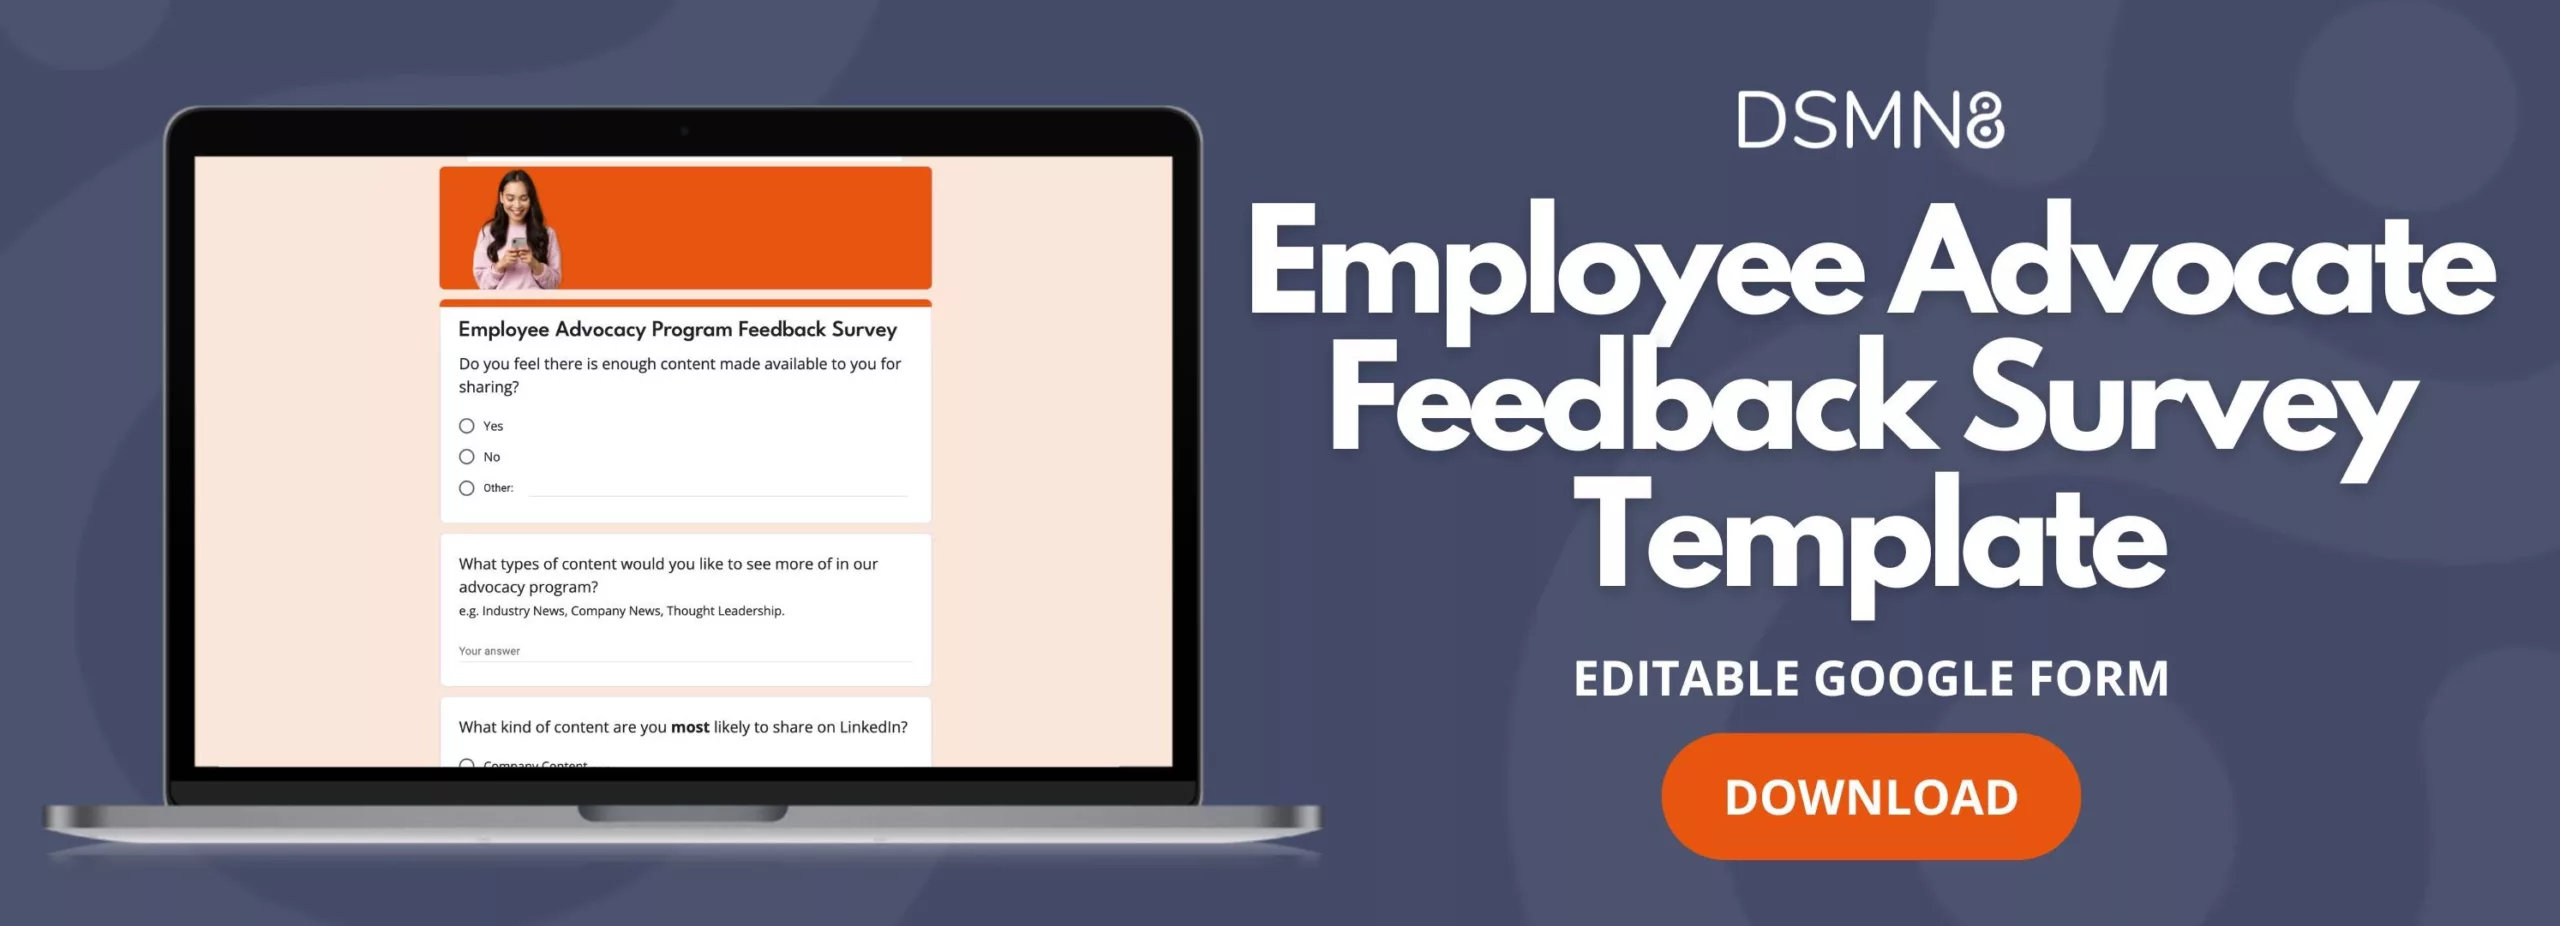 Employee Advocate Feedback Survey Template